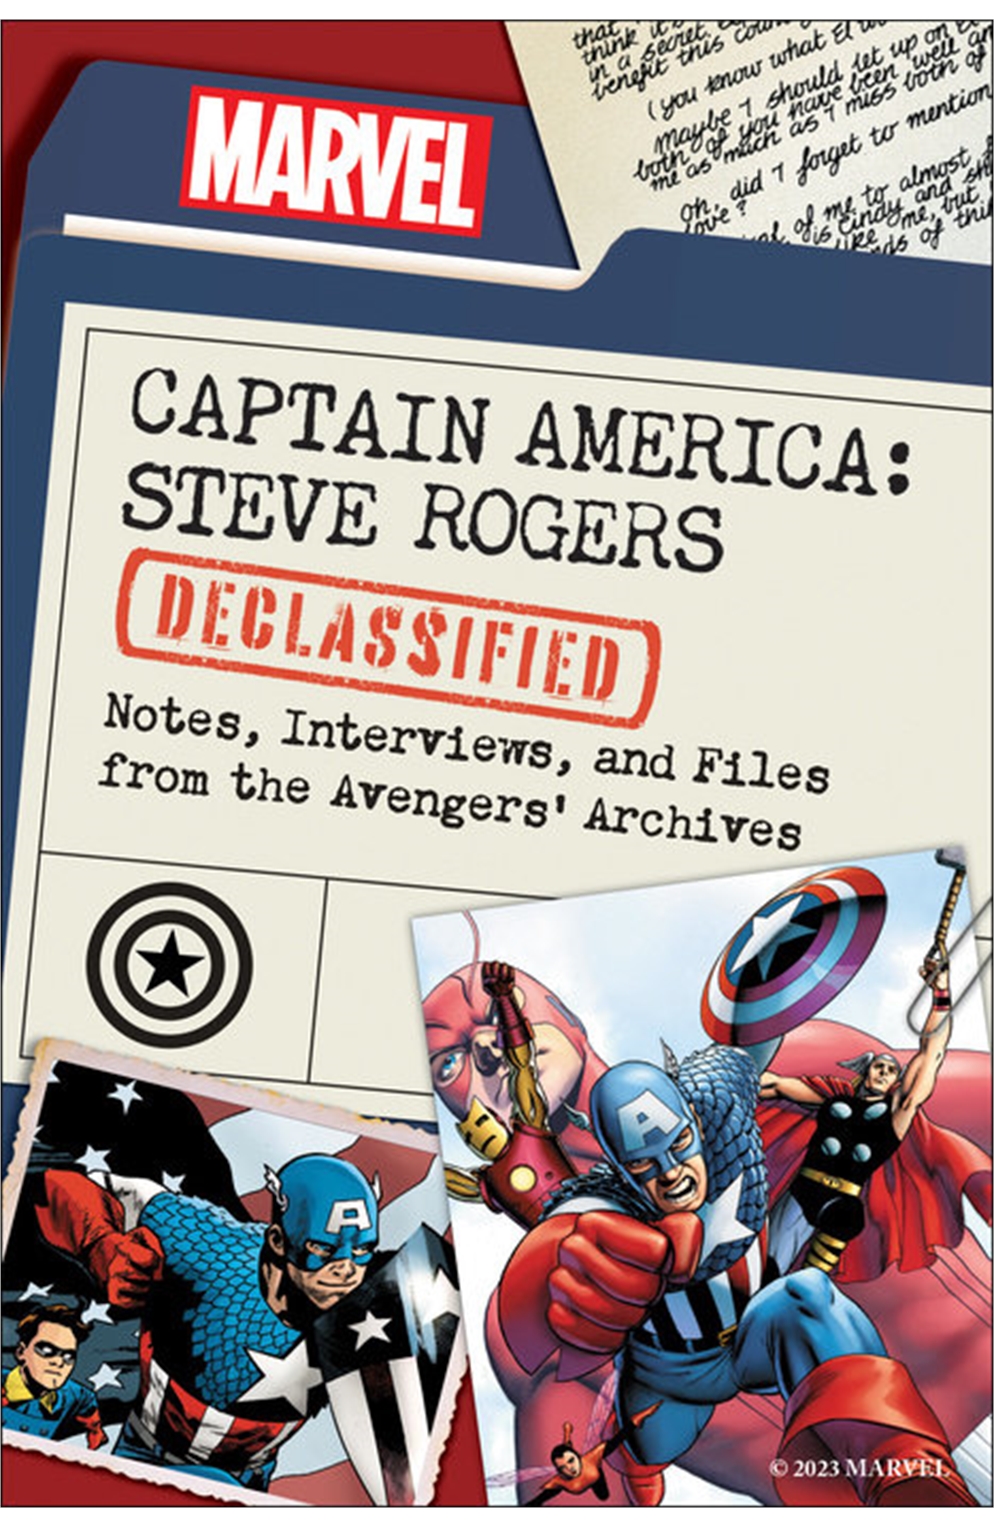 Captain America: Steve Rogers Declassified 

Look